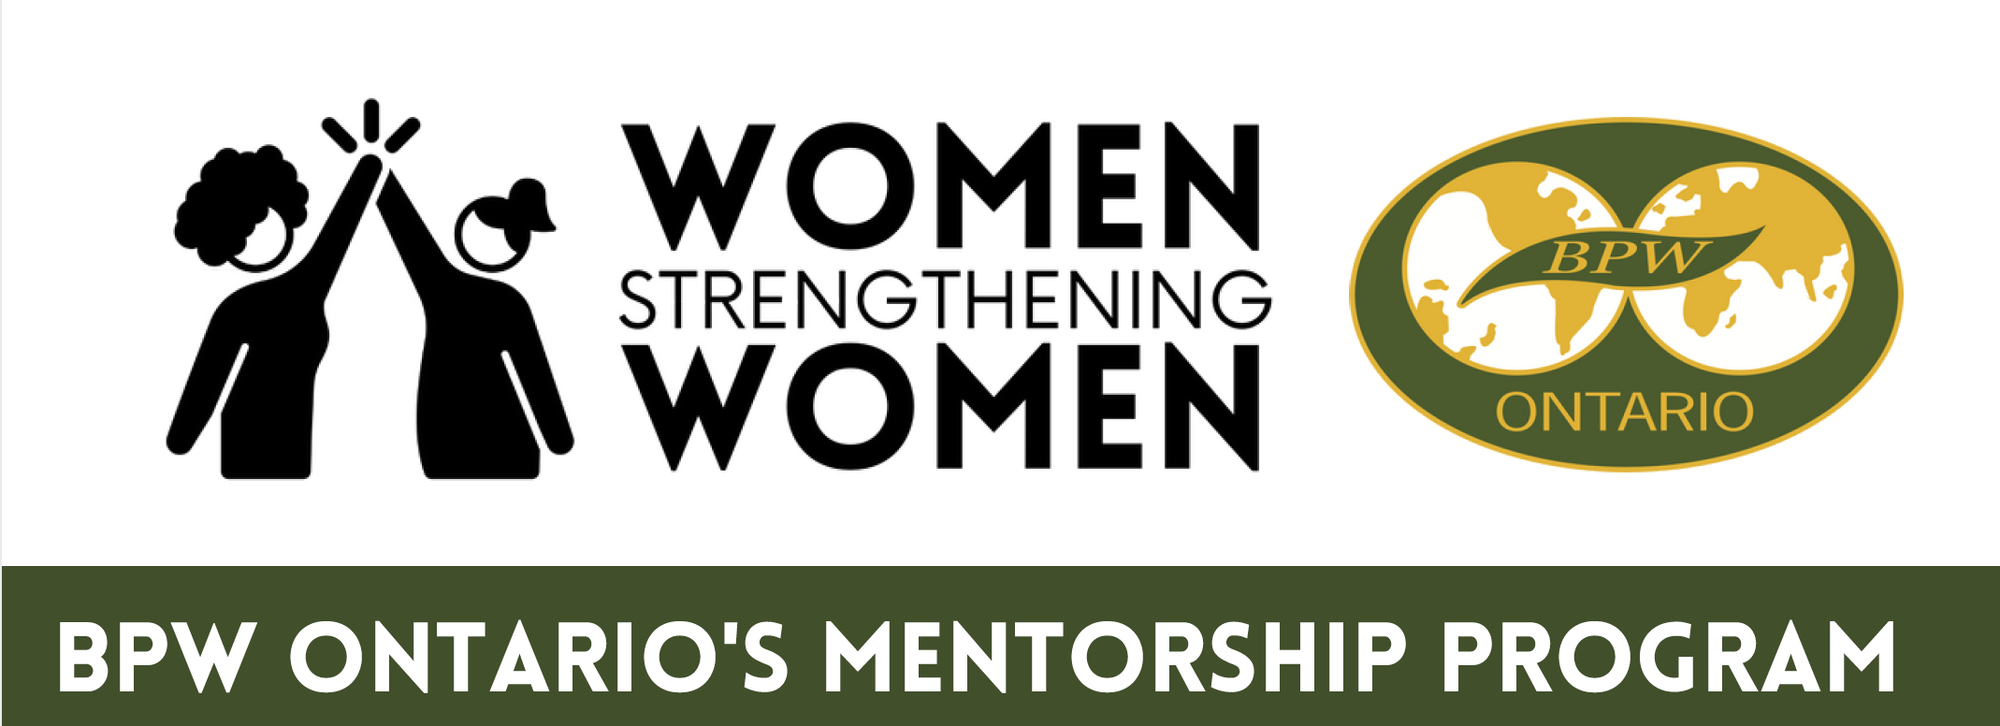 Women Strengthening Women - BPW Ontario Mentorship Program